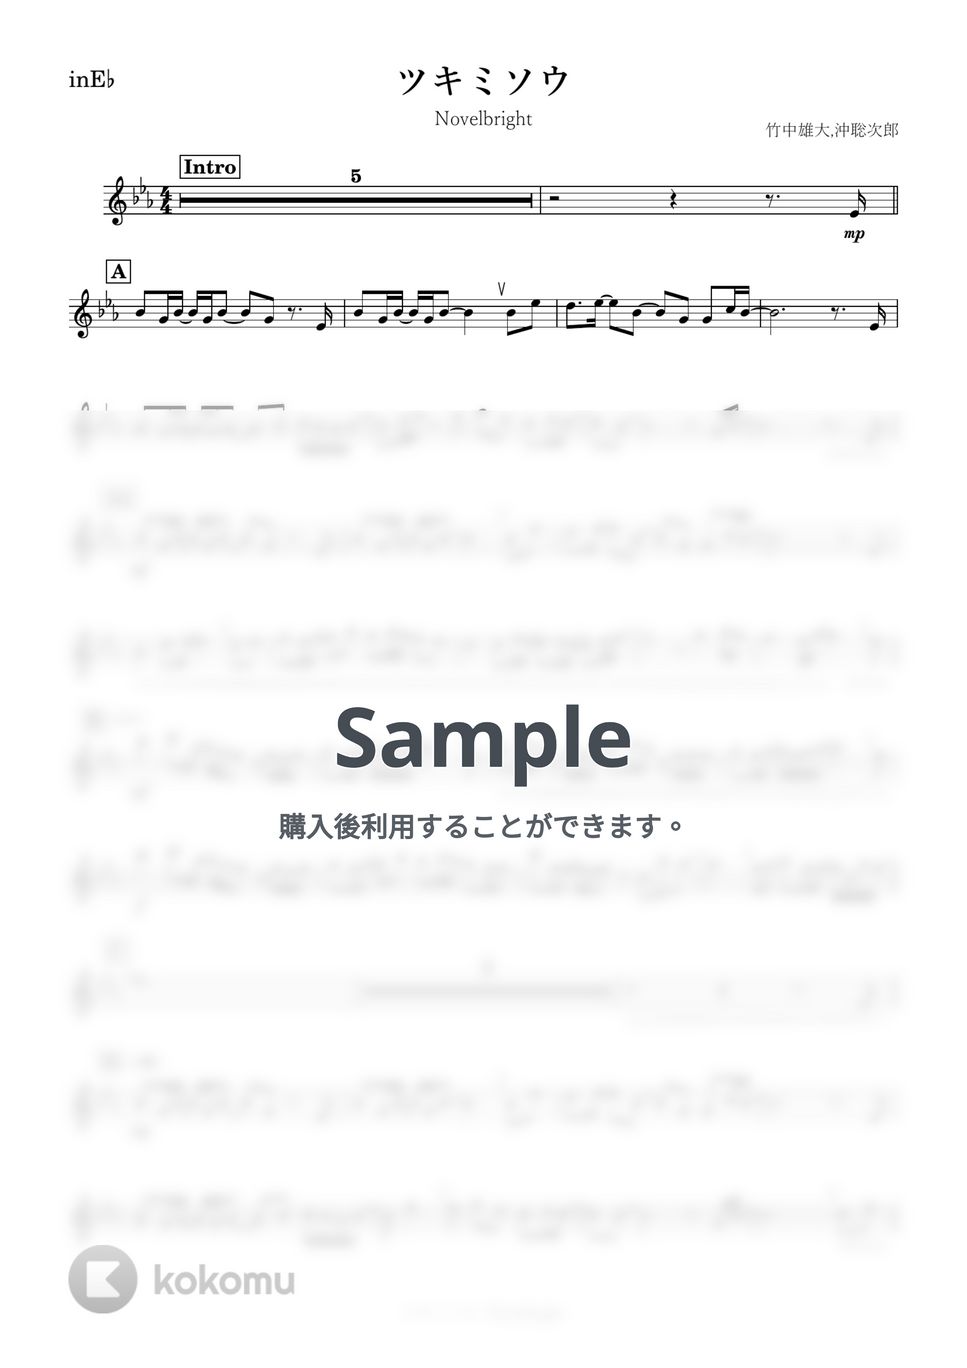 Novelbright - ツキミソウ (E♭) by kanamusic